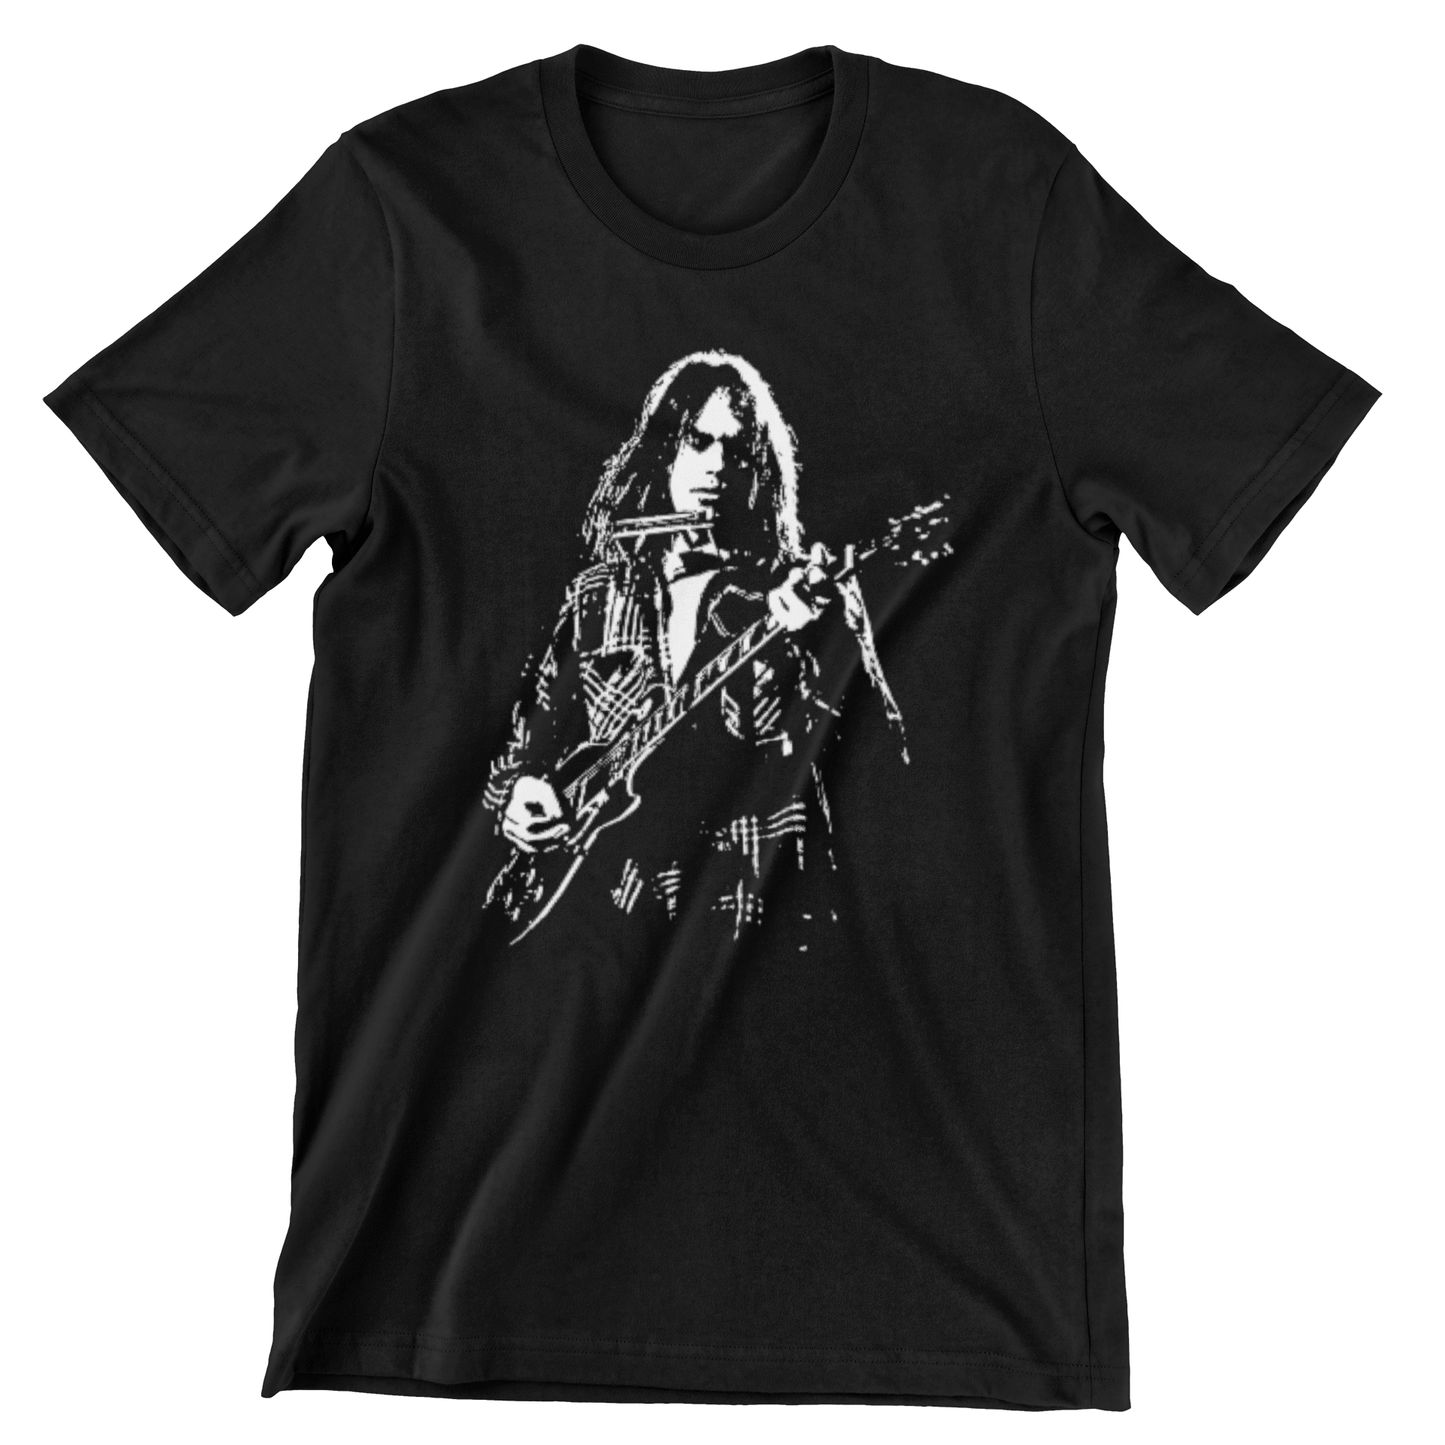 Copy of Neil Young T Shirt Grunge Harp t shirts rockviewtees.com